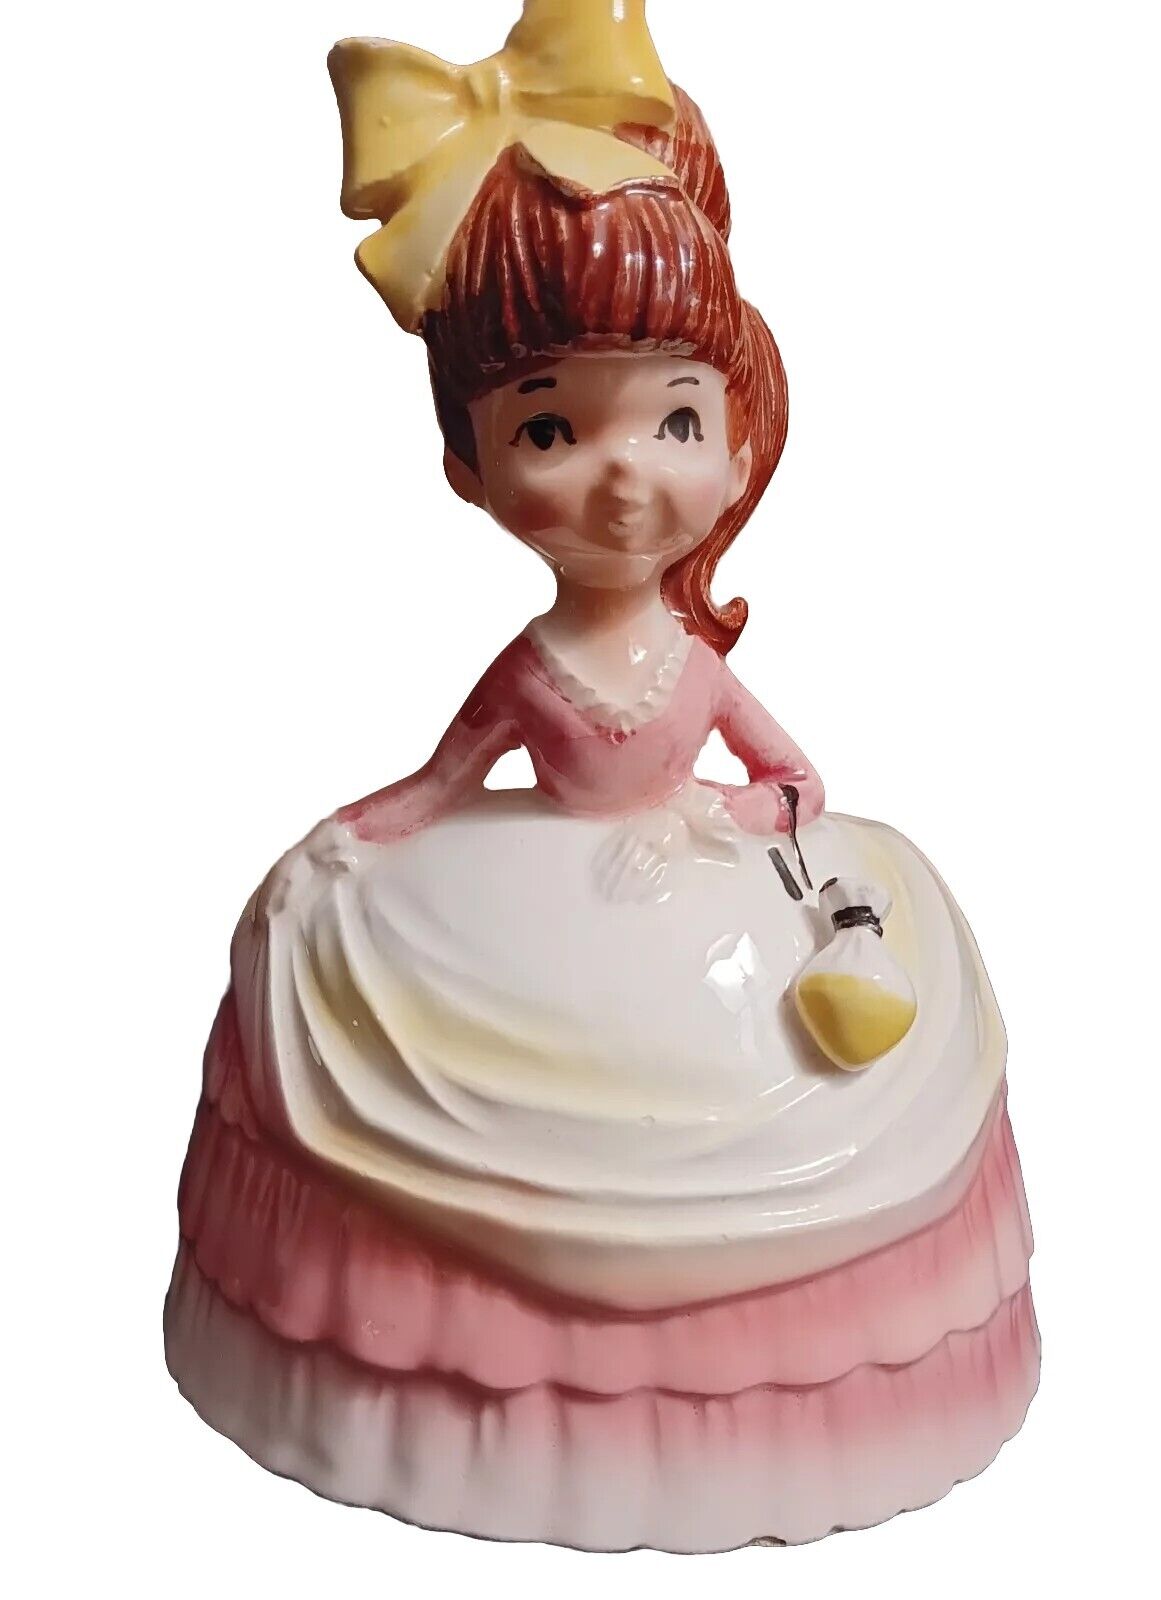 Inarco Vintage Ceramic Planter Girl Pink White Dress Big Yellow Bow JAPAN